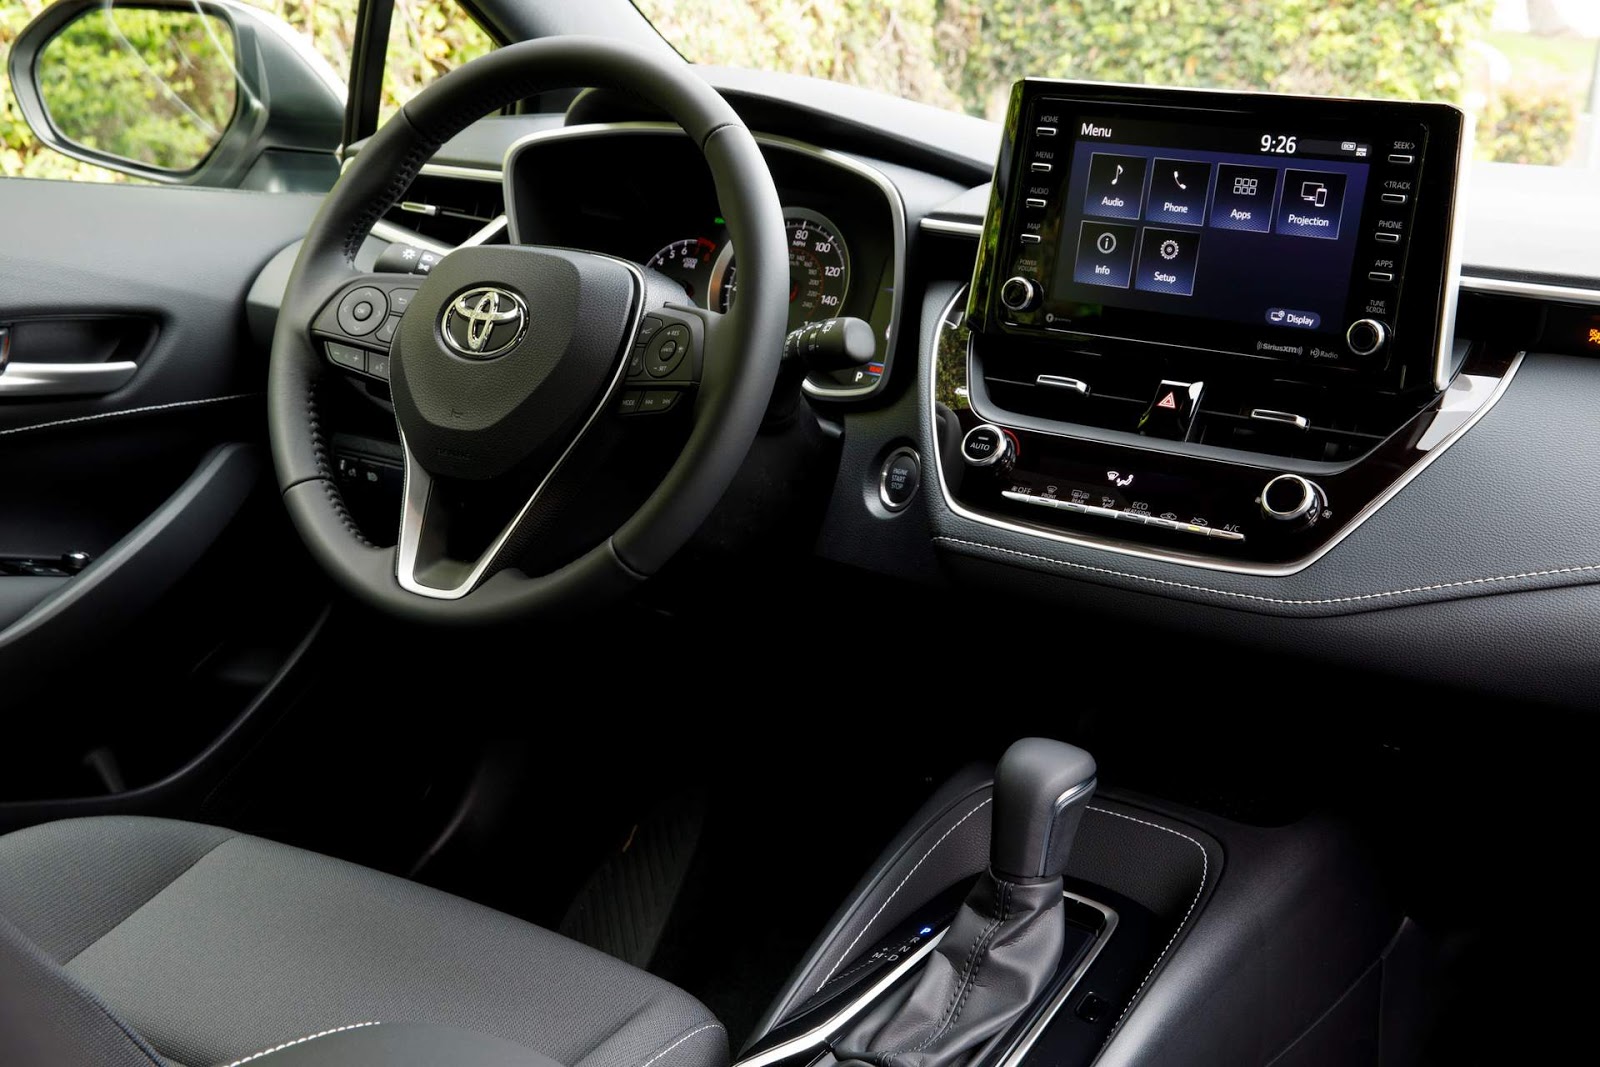 Toyota Corolla 2019 Hatch chega mais esportivo e seguro